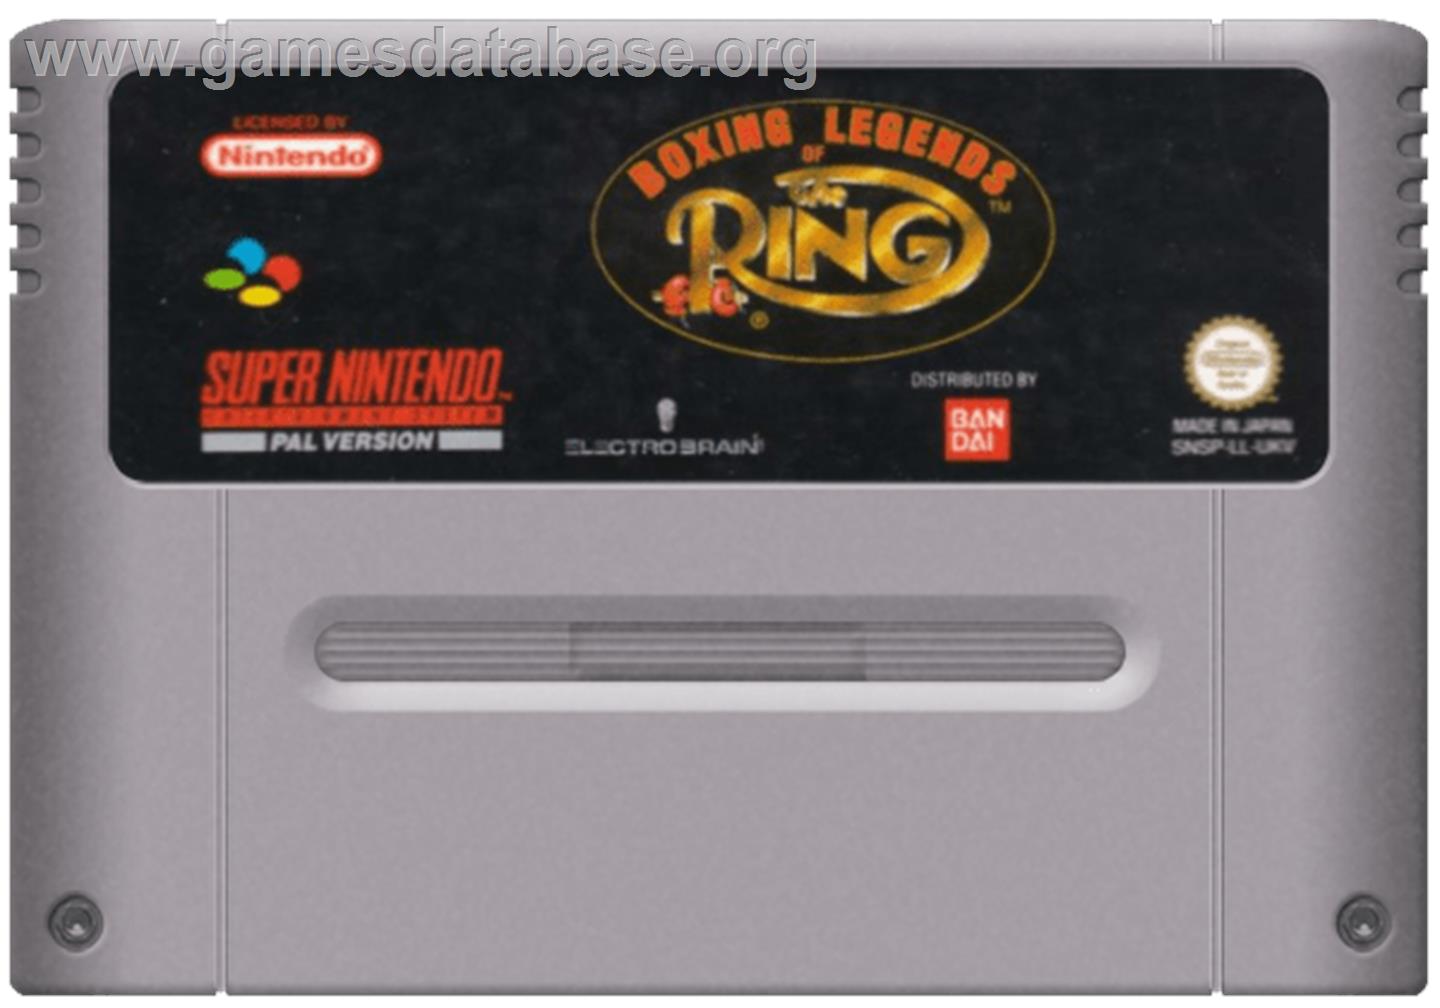 Boxing Legends of the Ring - Nintendo SNES - Artwork - Cartridge